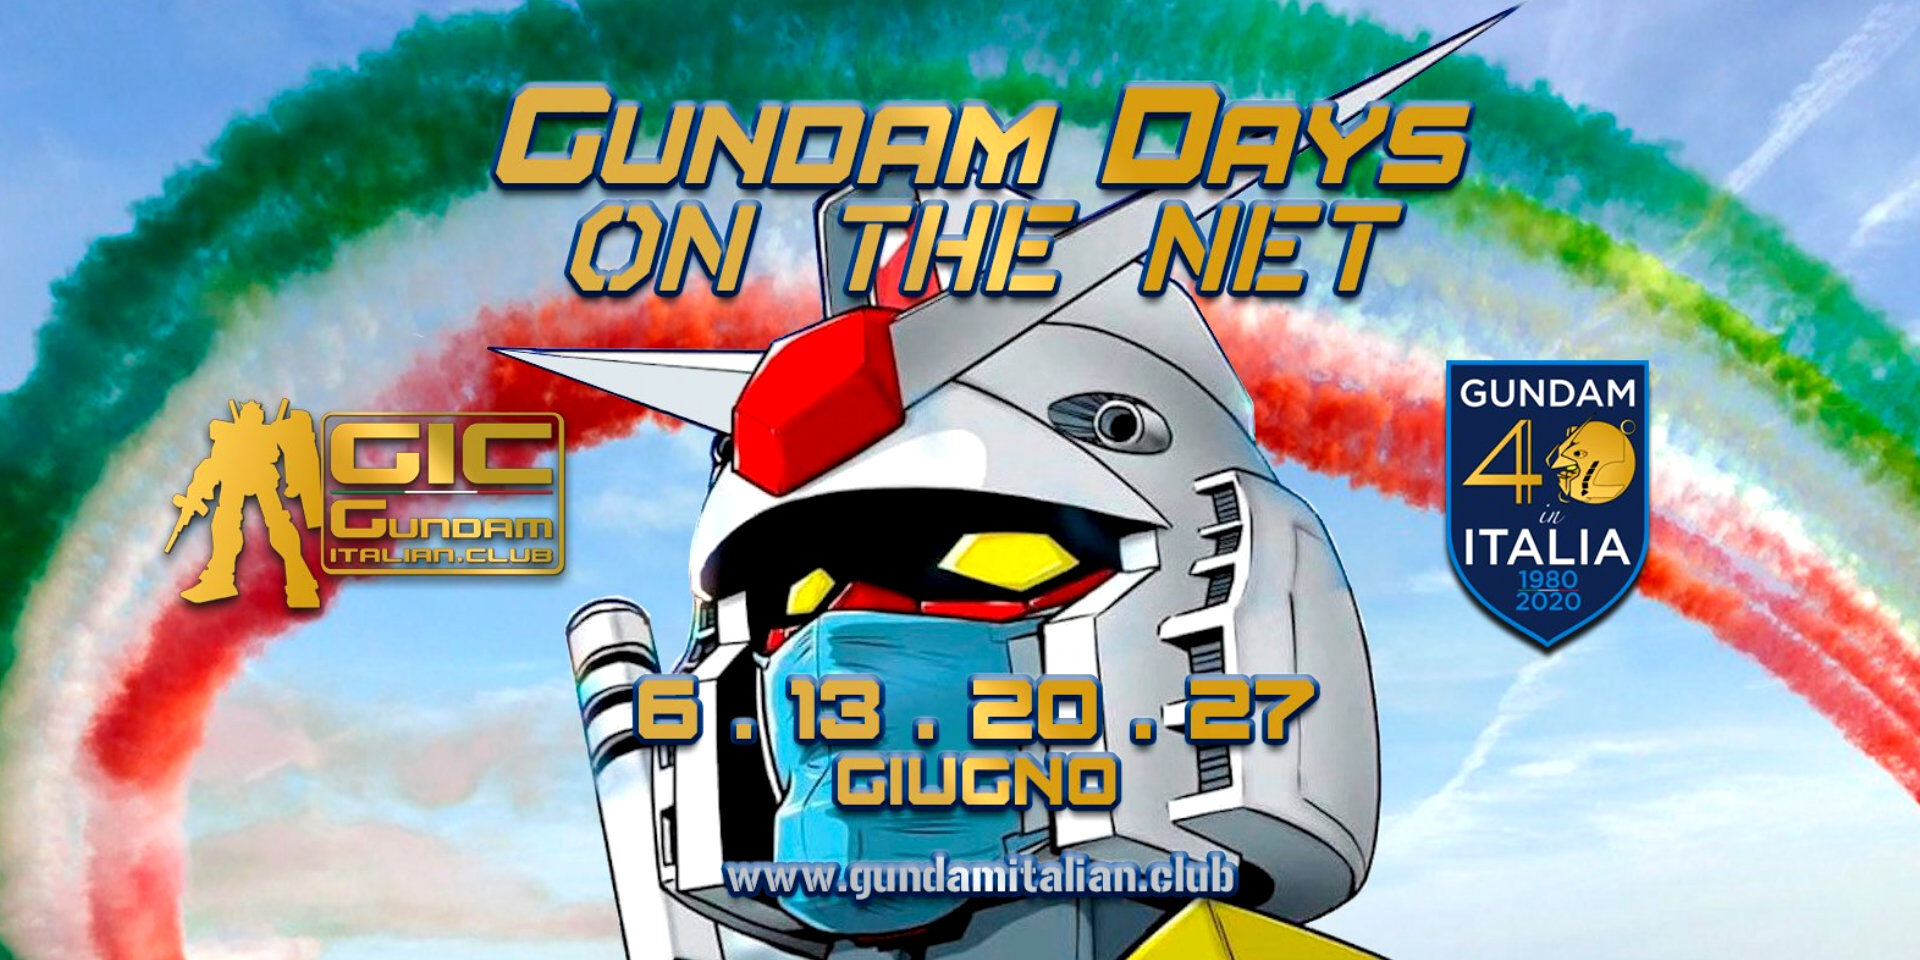 Gundam Days on the net!